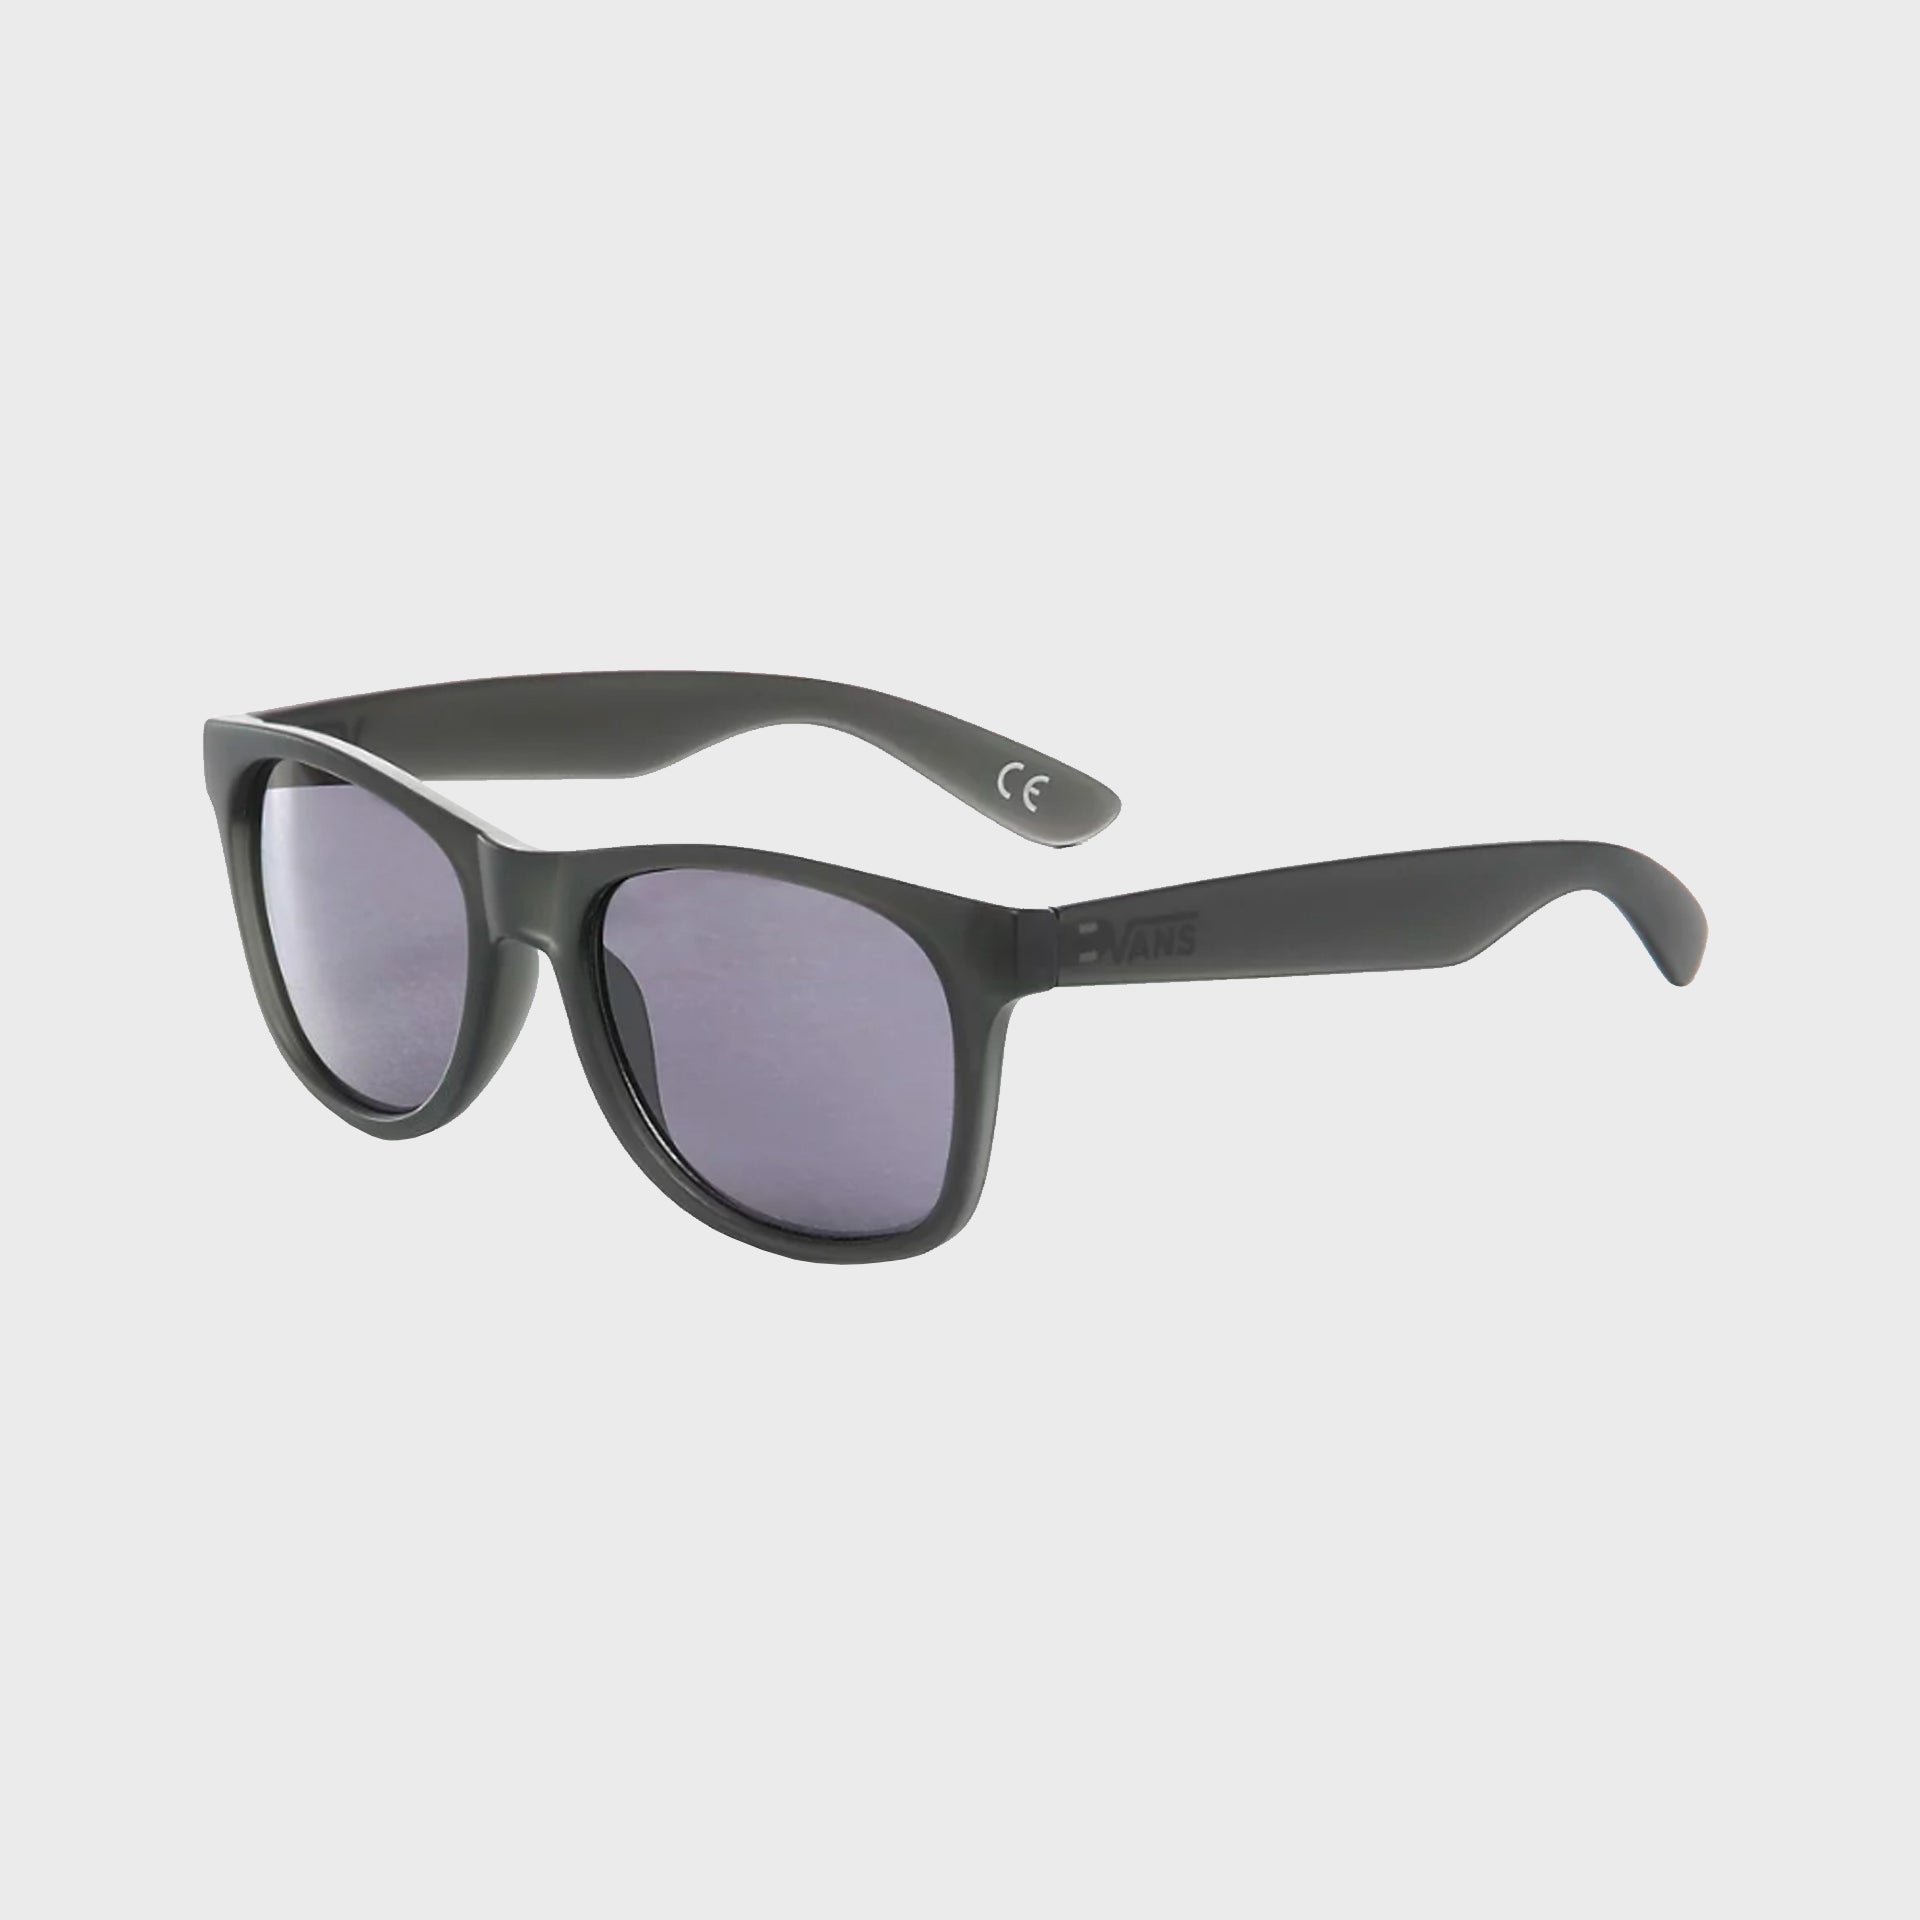 Spicoli Sunglasses - Black Frosted Translucent - ManGo Surfing